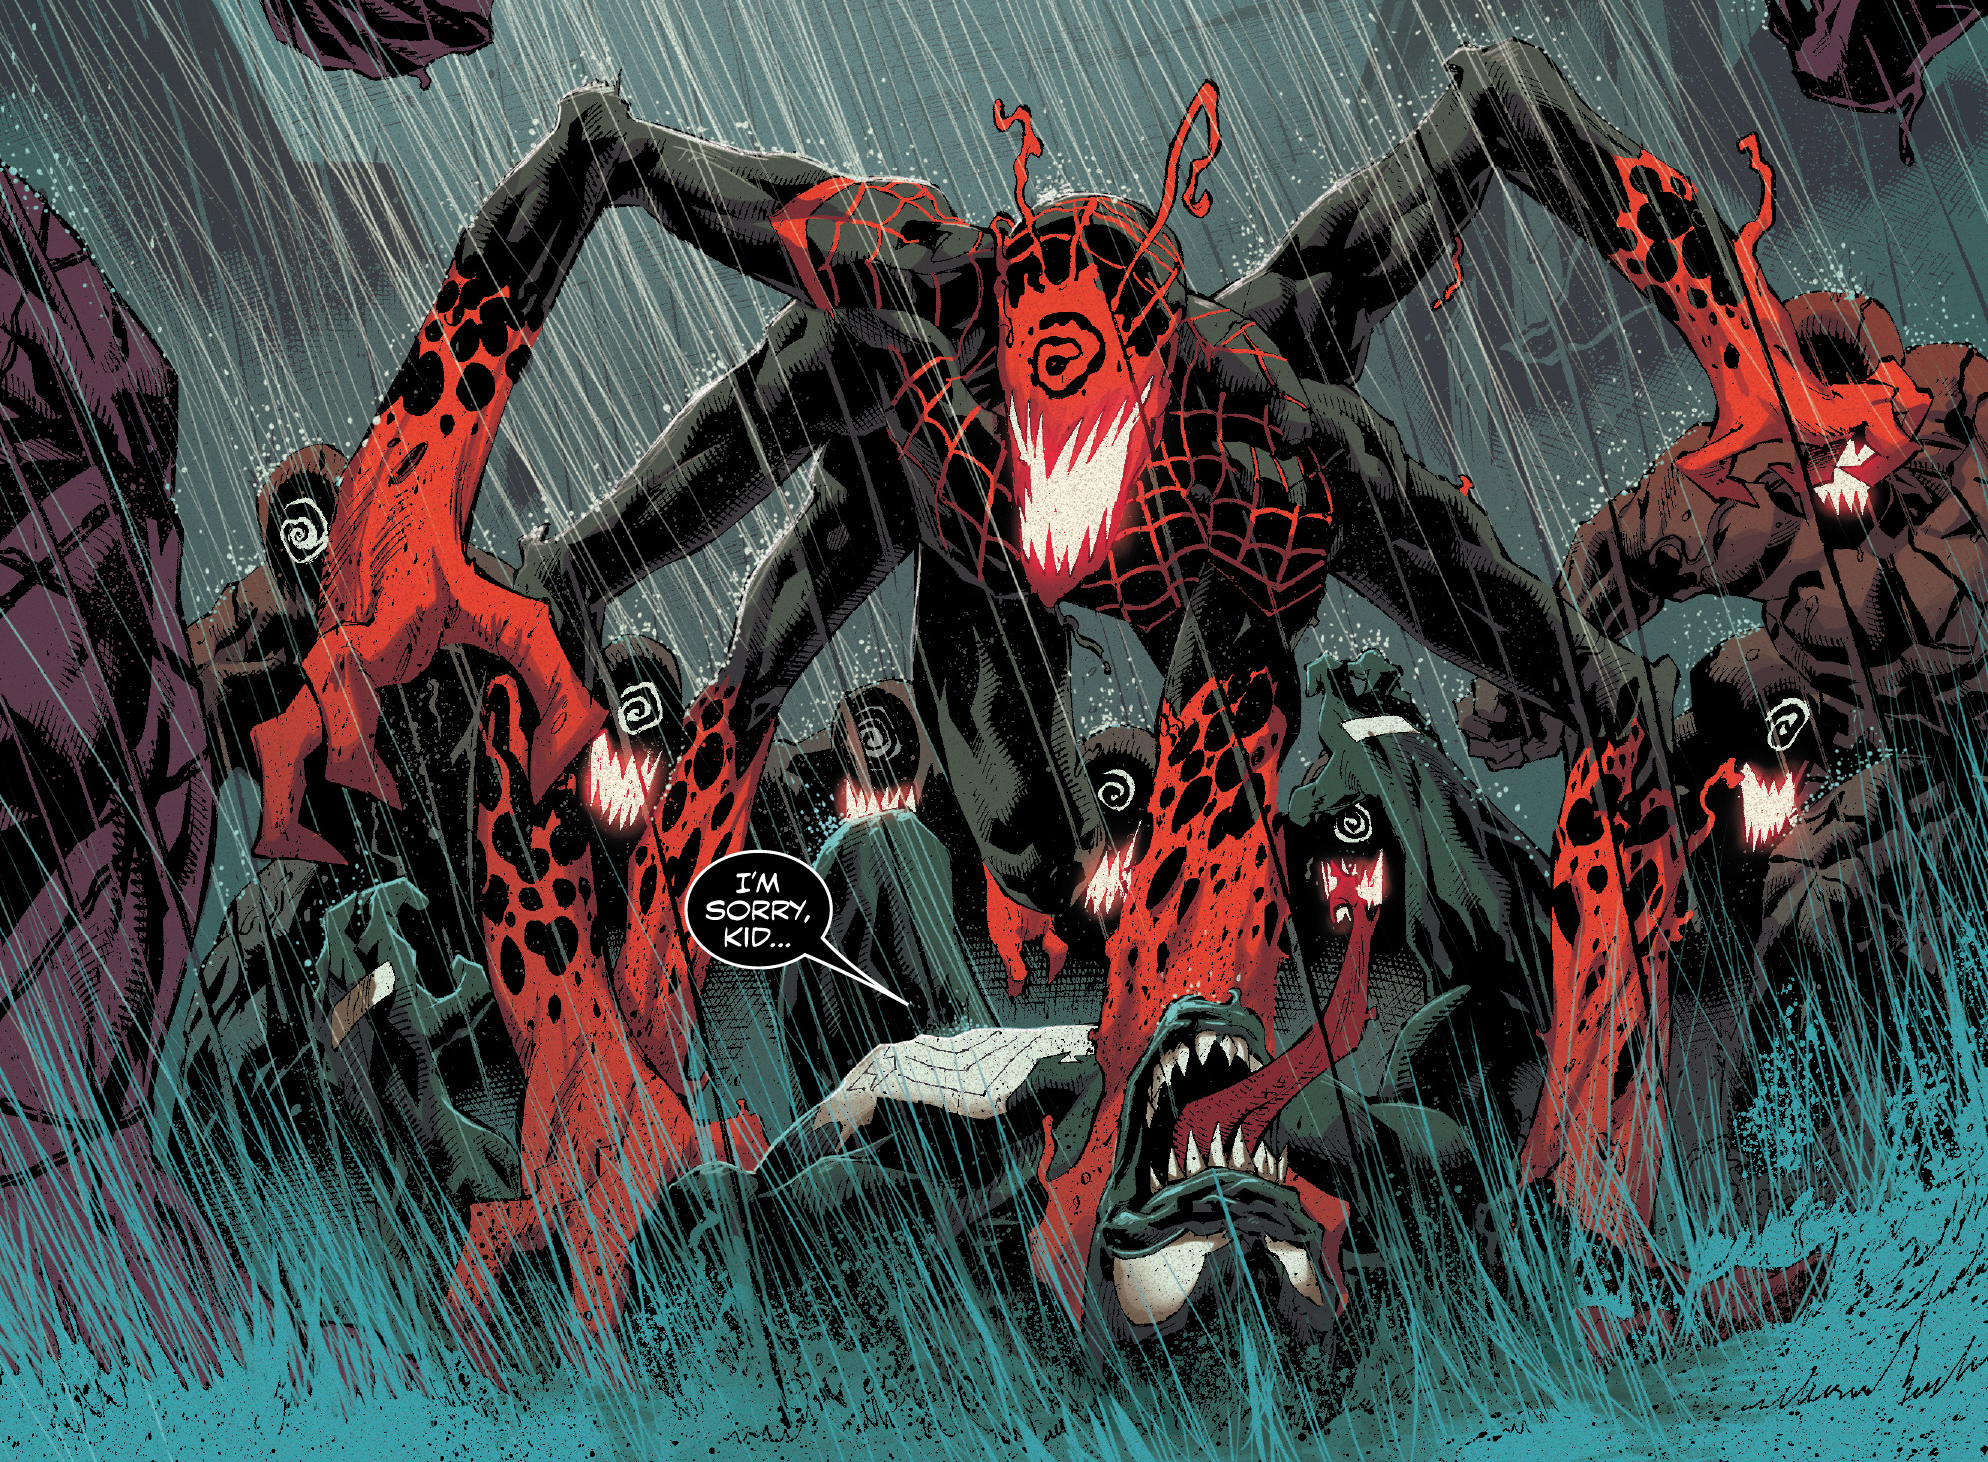 Venom - Miles Morales Spider-Man with Venom & Carnage Symbiotes